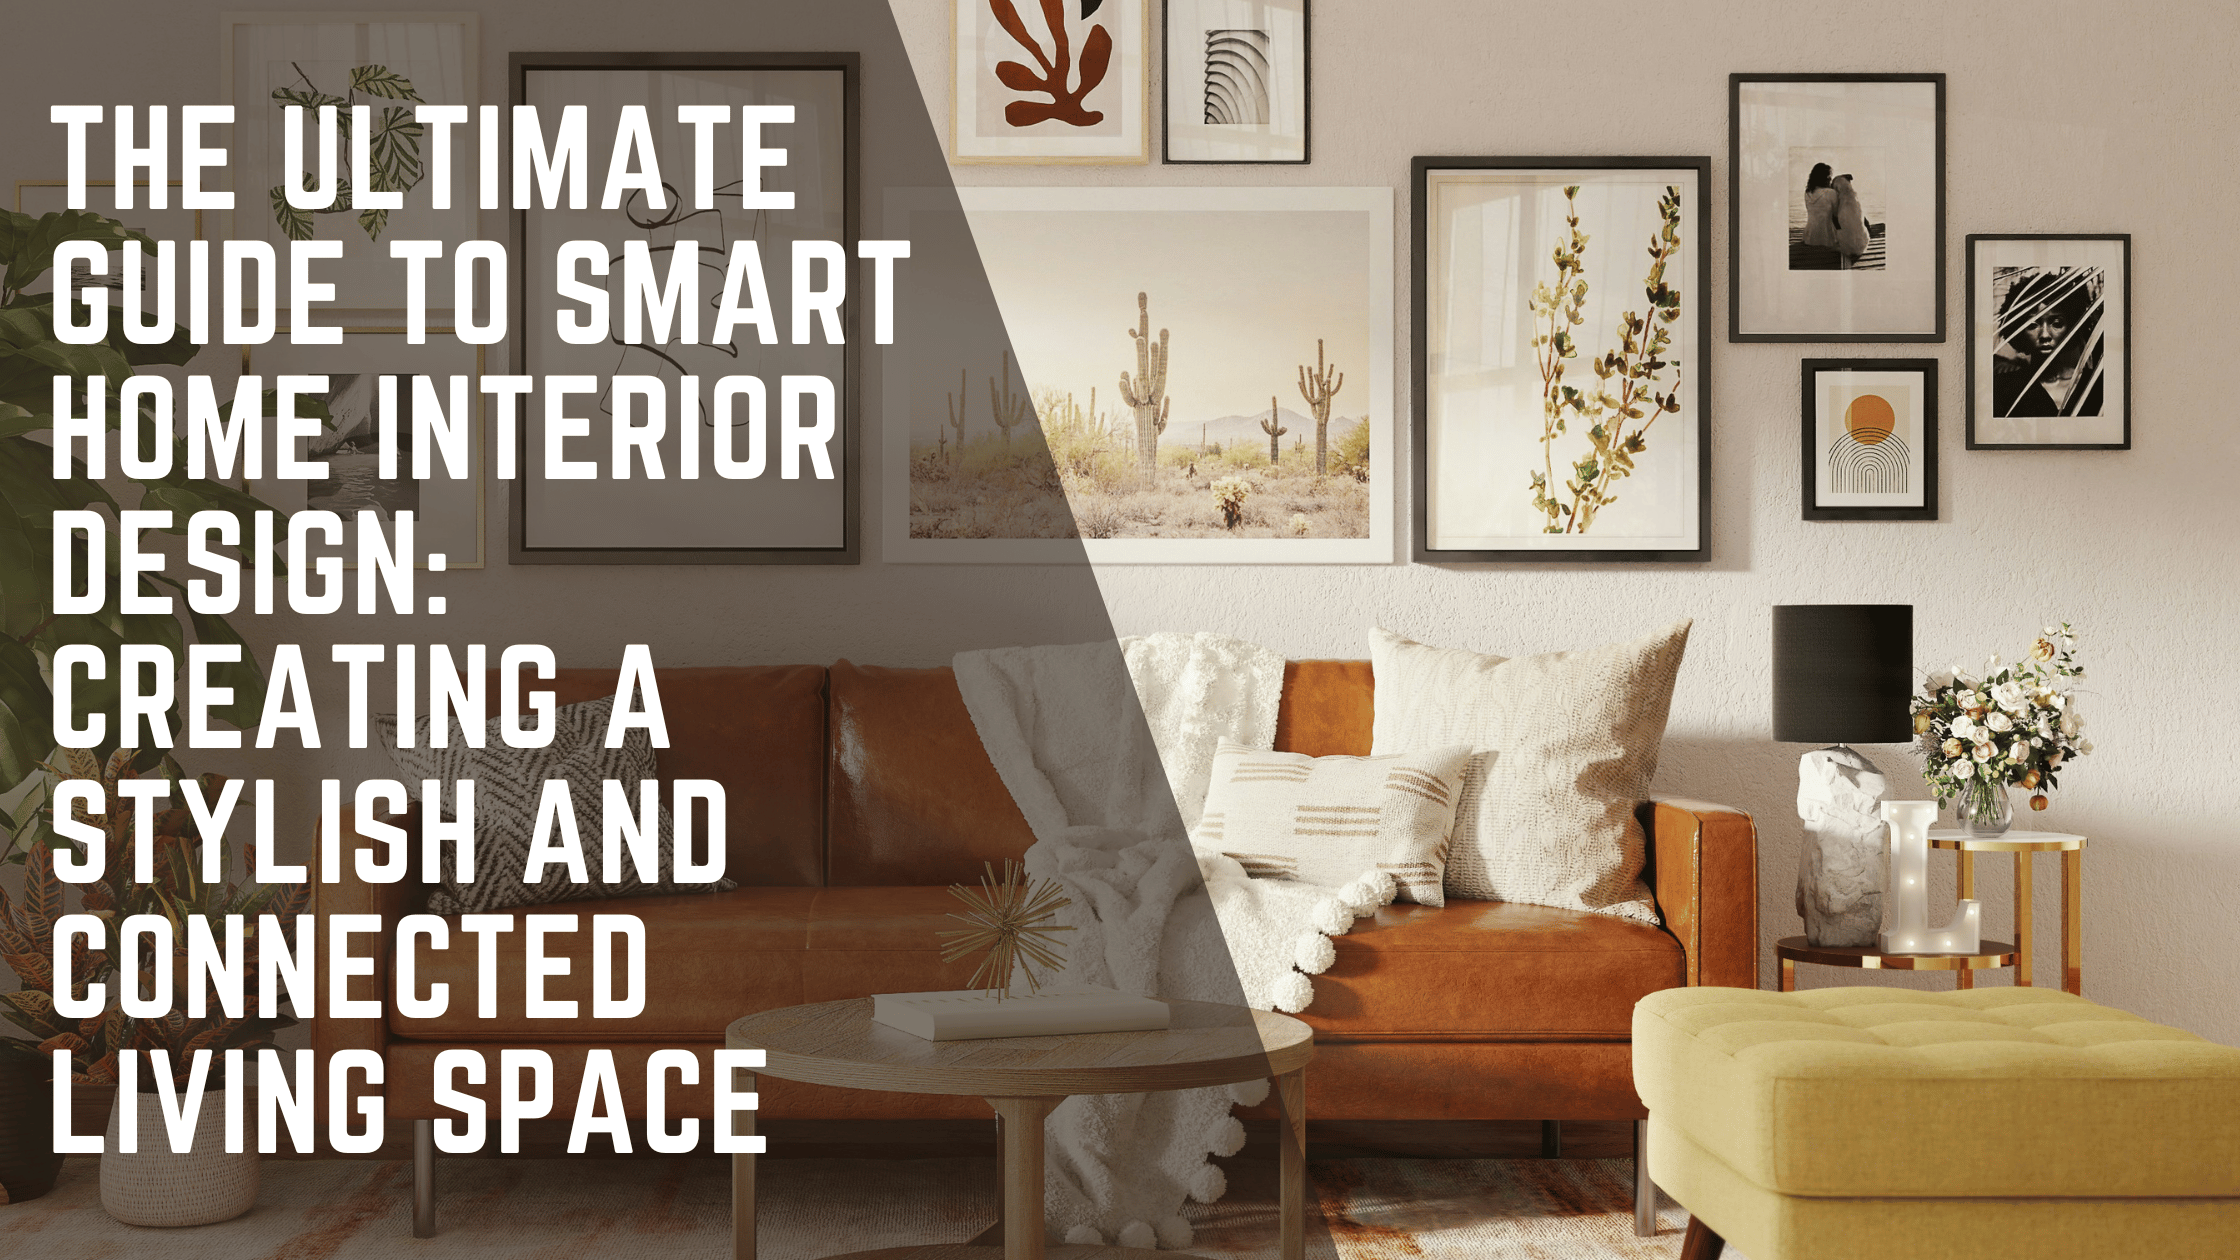 Smart home interior design